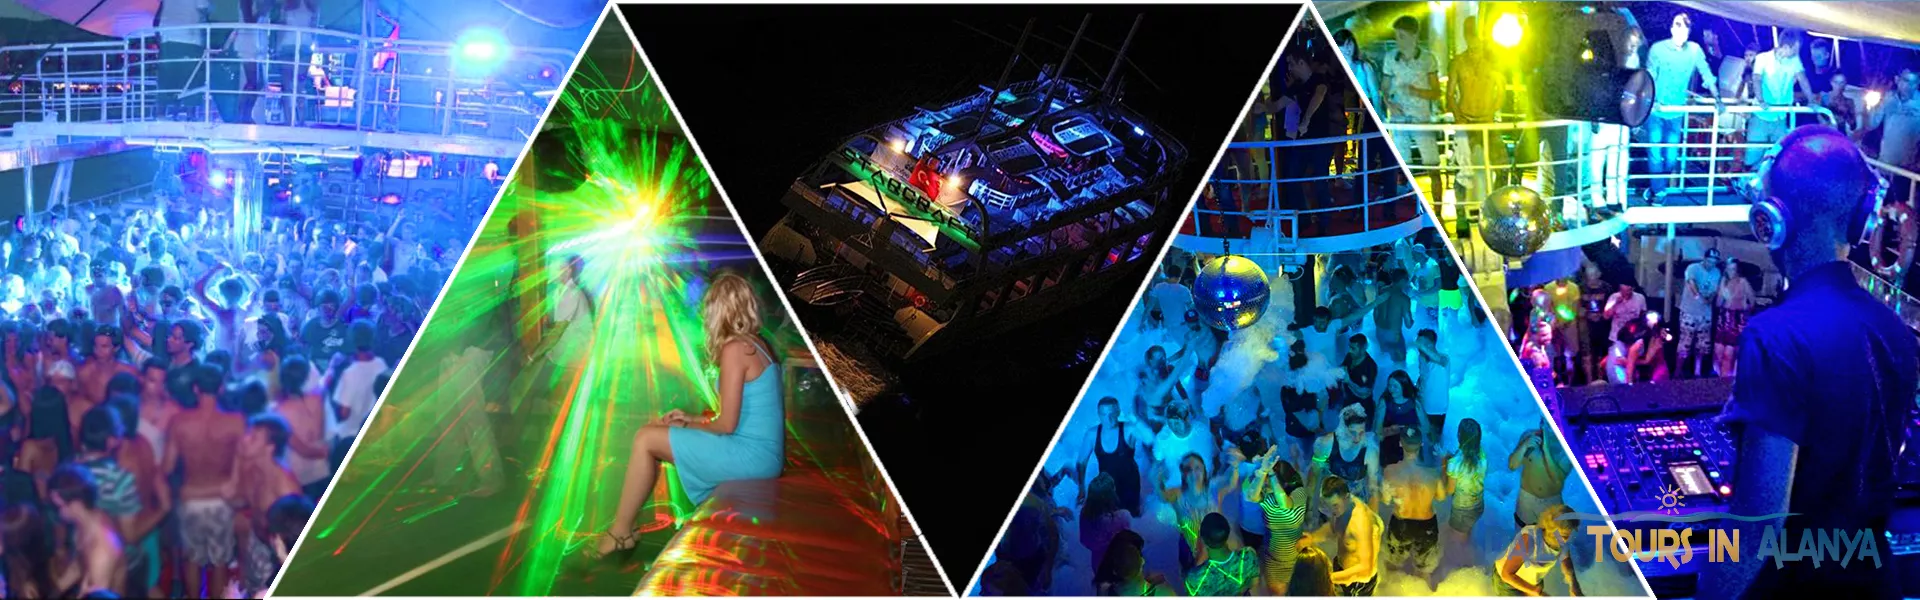 Alanya Starcraft Night Party Boat Tour